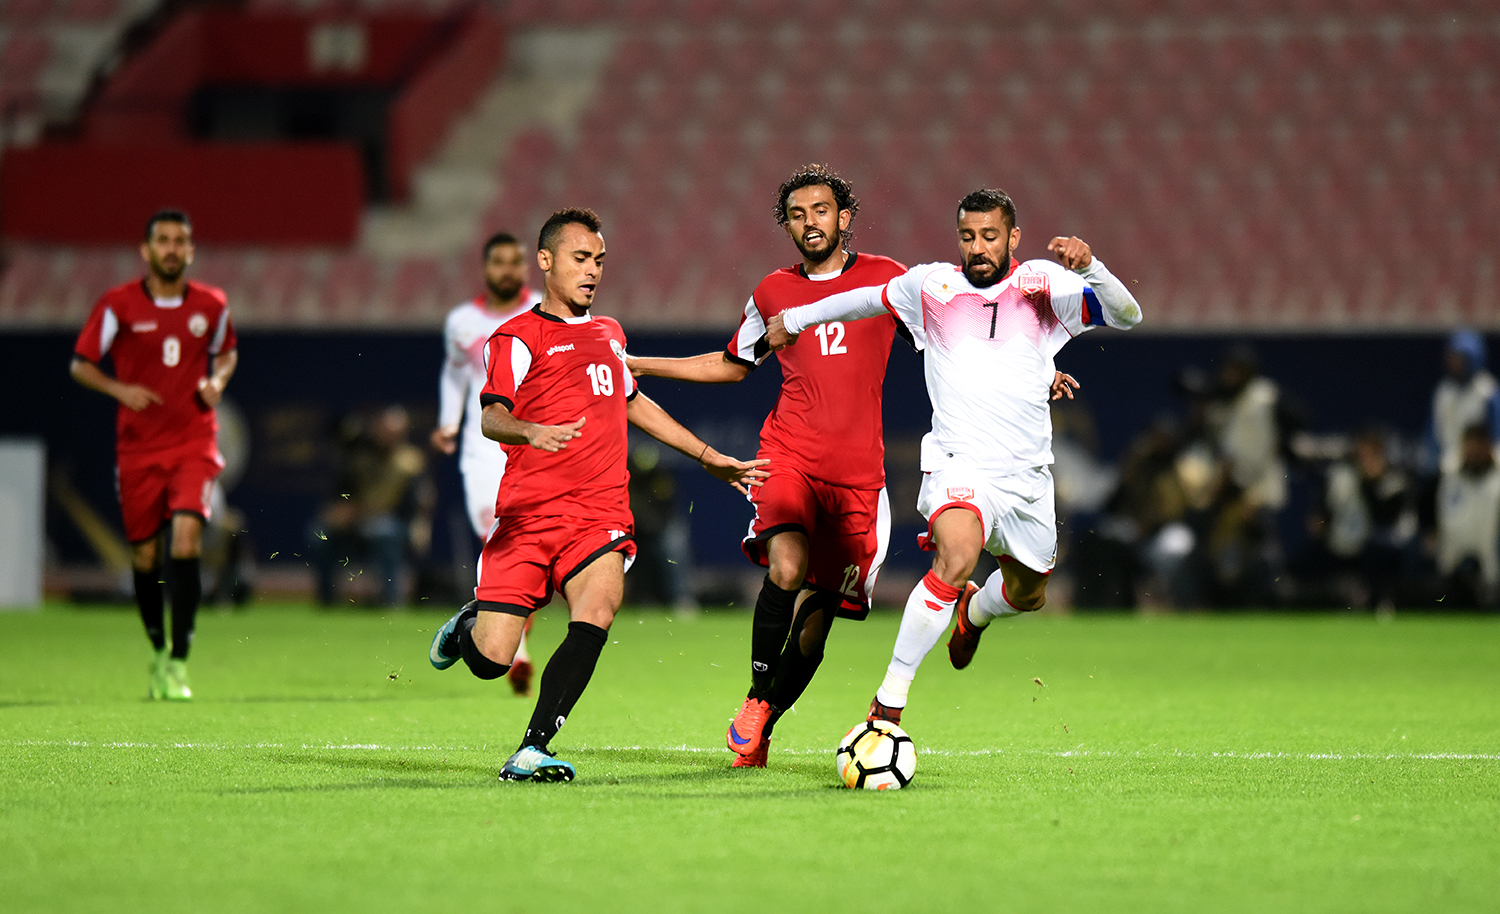 Bahrain beat Yemen 1-0 in Gulf tourney